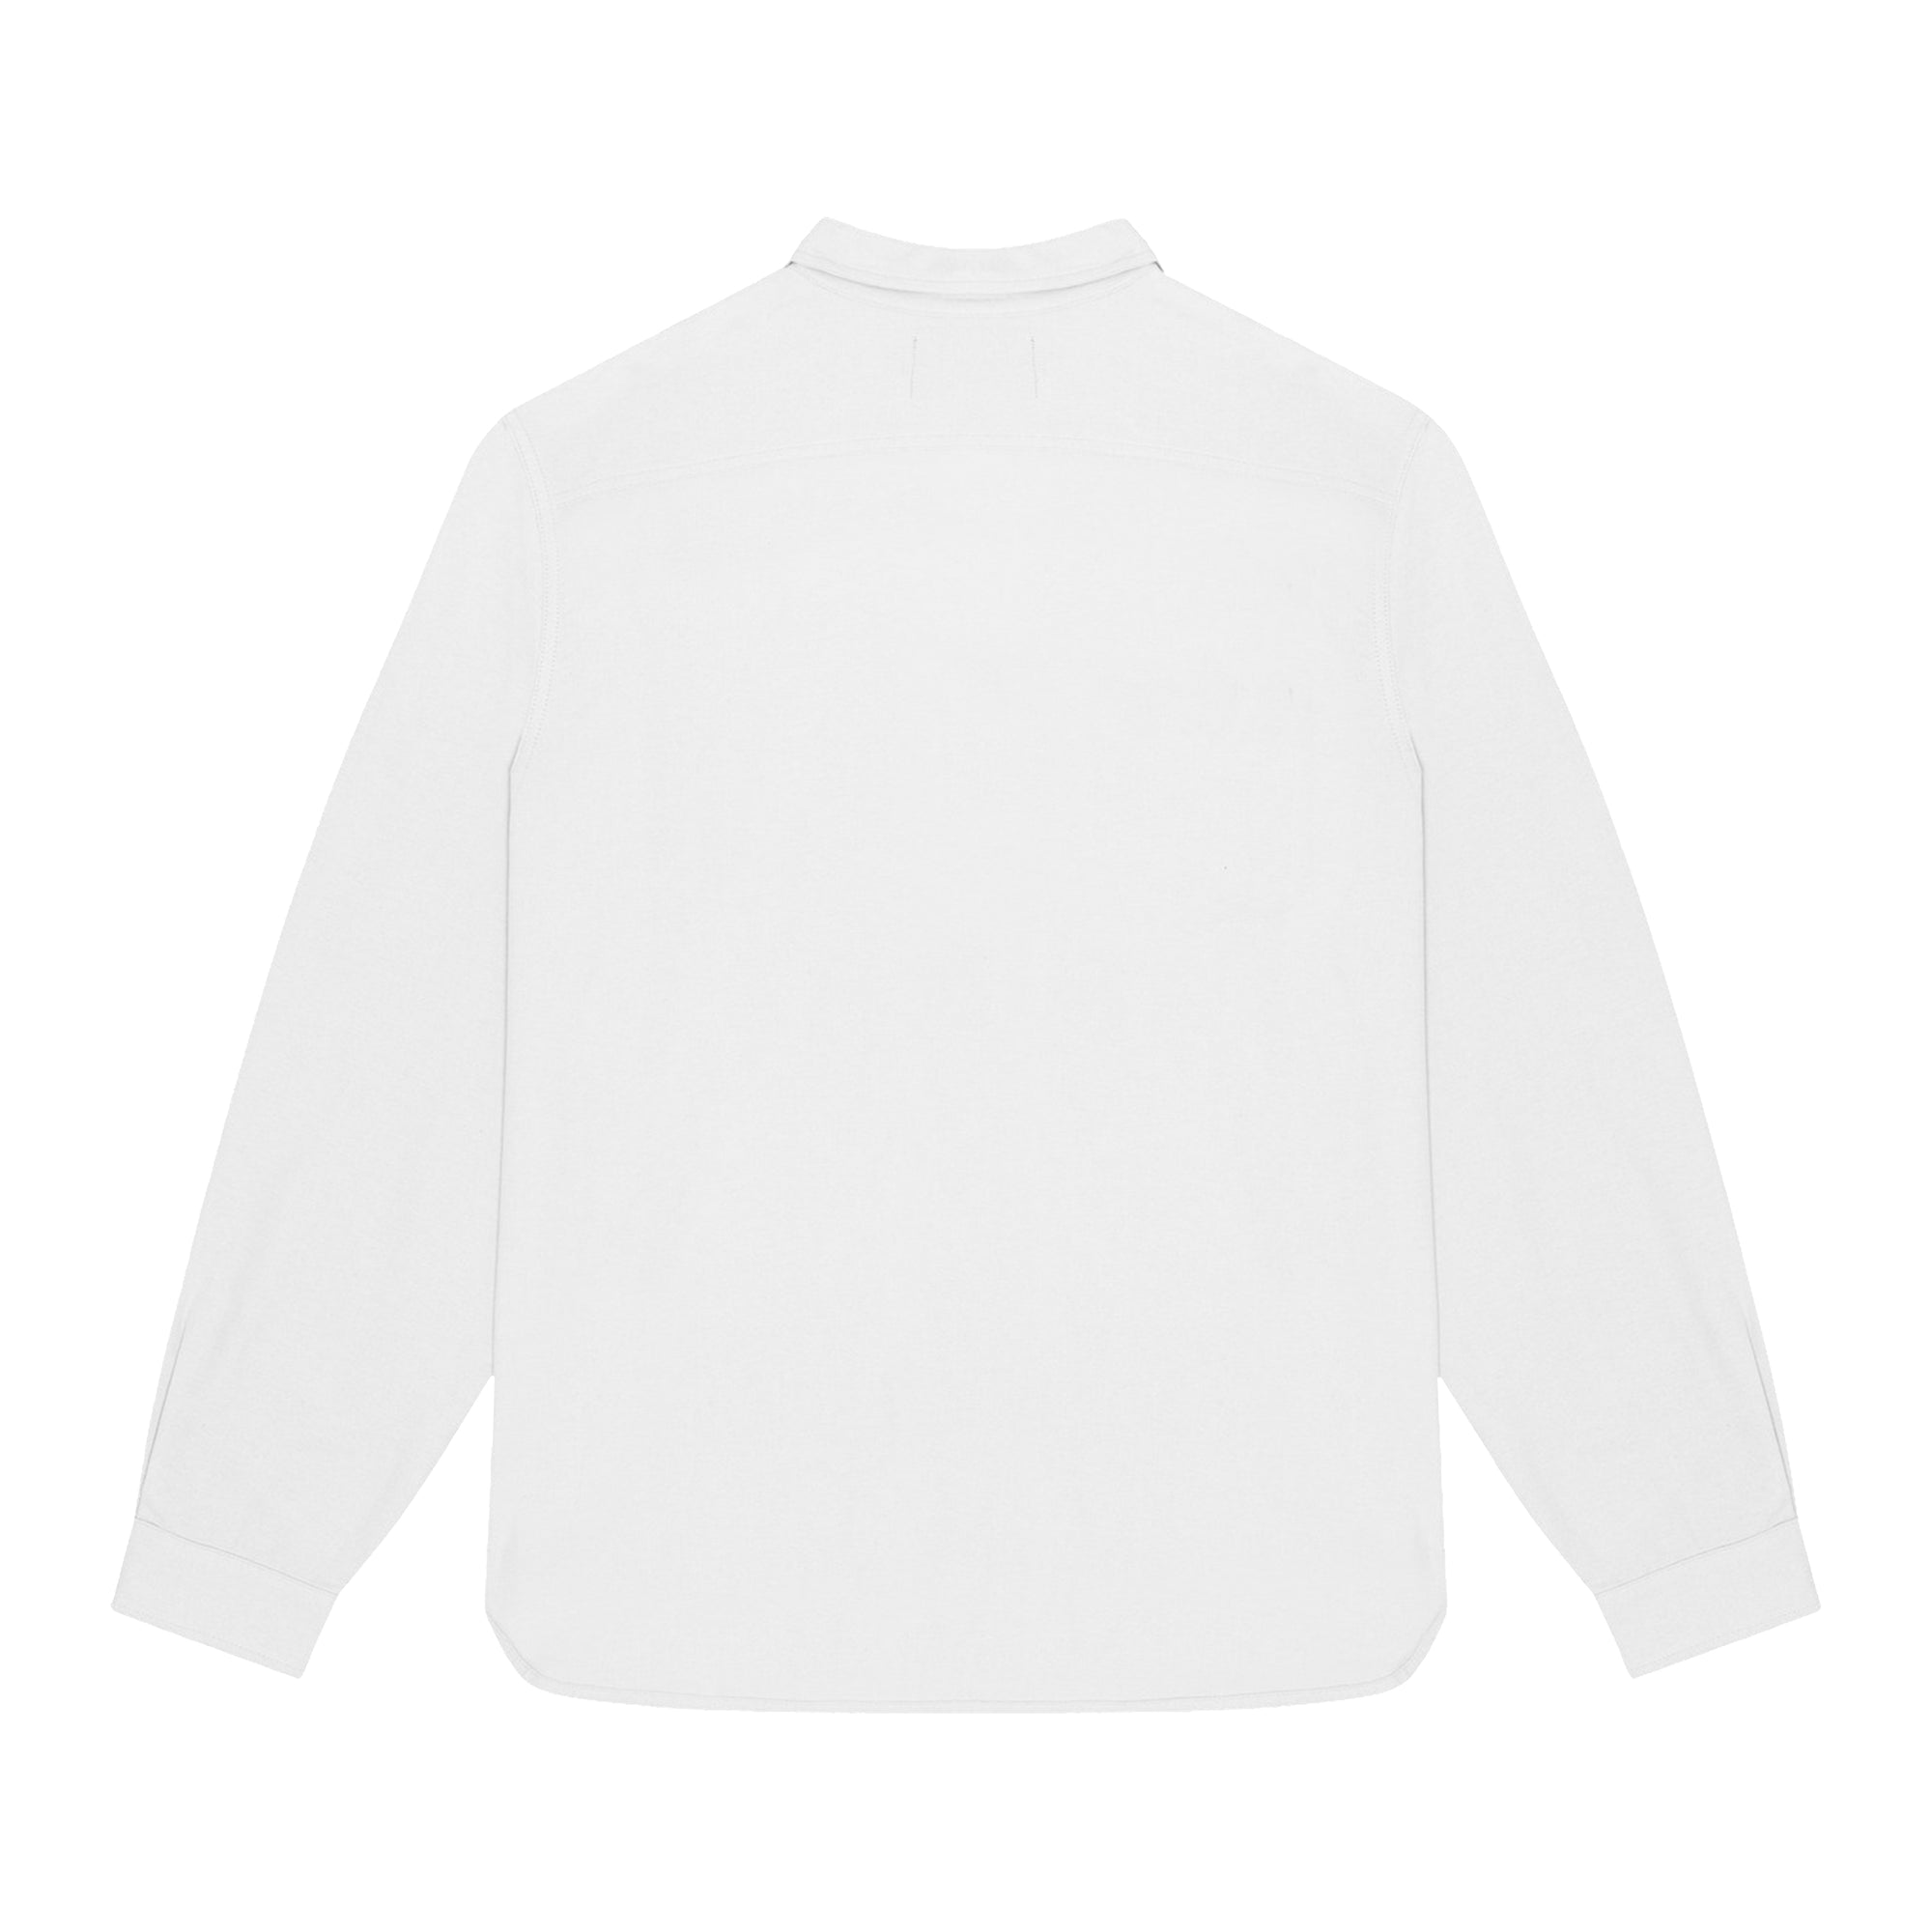 Denim Tears - Men's Denim Sport Oxford Shirt - (White) view 2